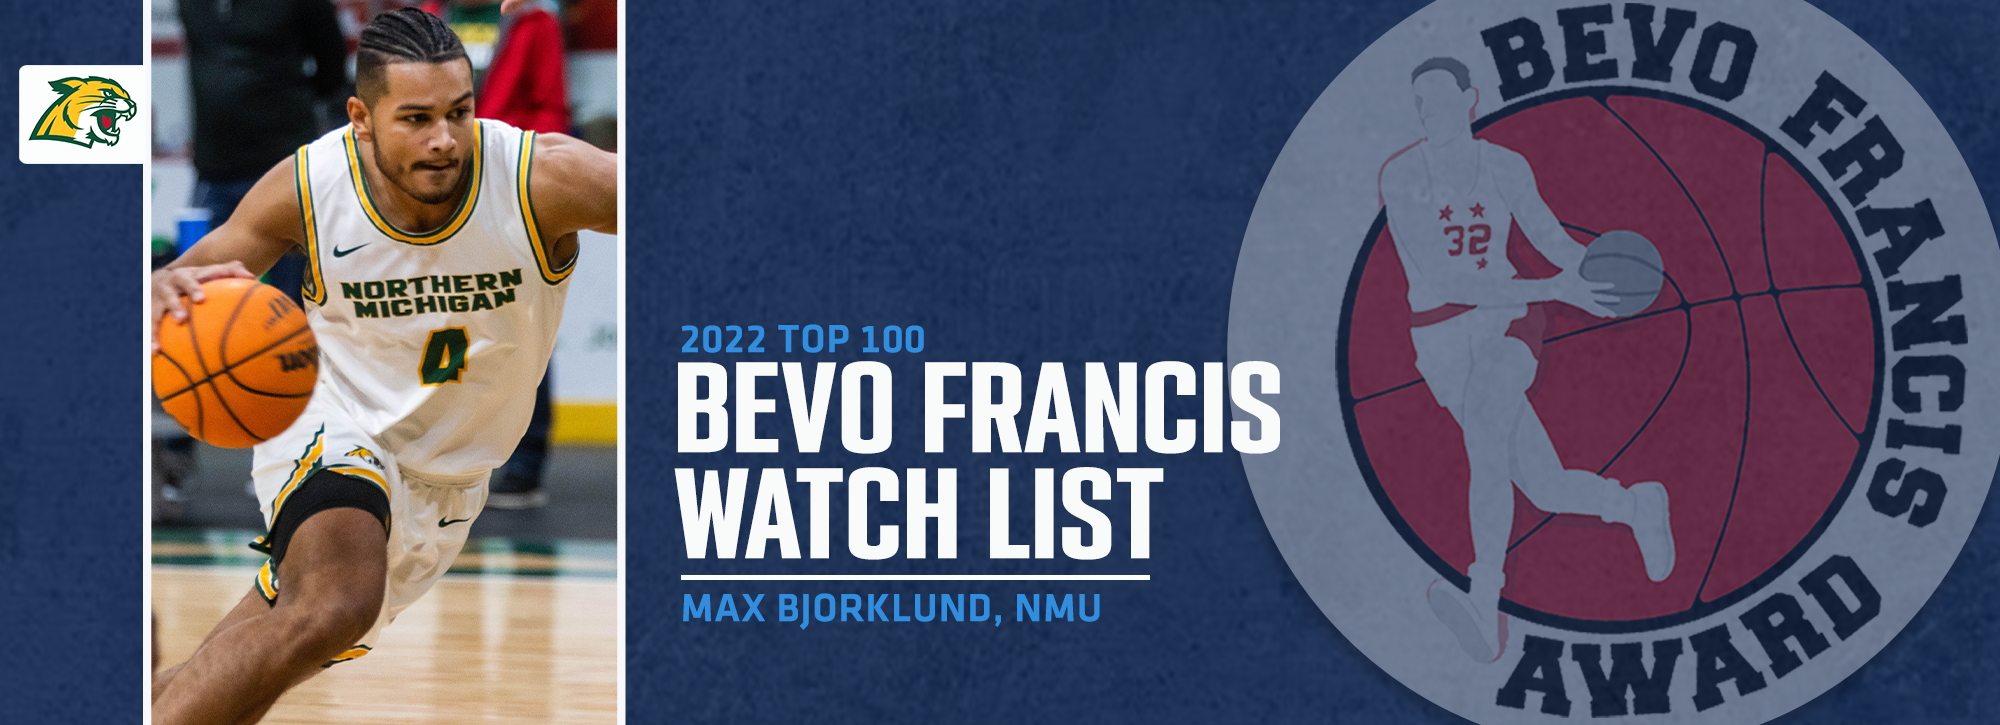 NMU's Bjorklund named to Bevo Francis Top 100 Watch List